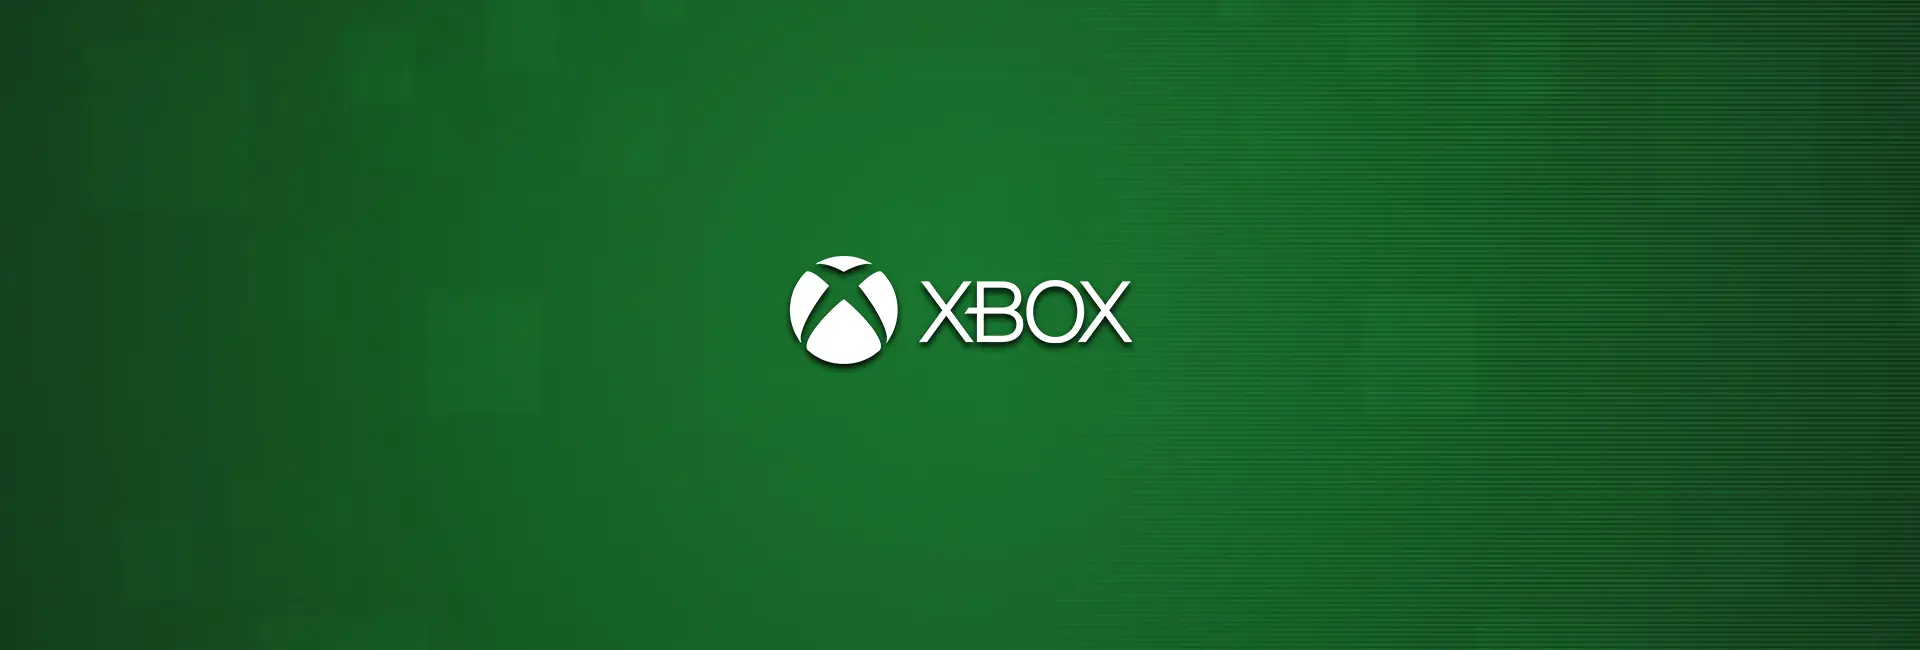  Microsoft - Xbox Game Pass Ultimate 3 Month Membership